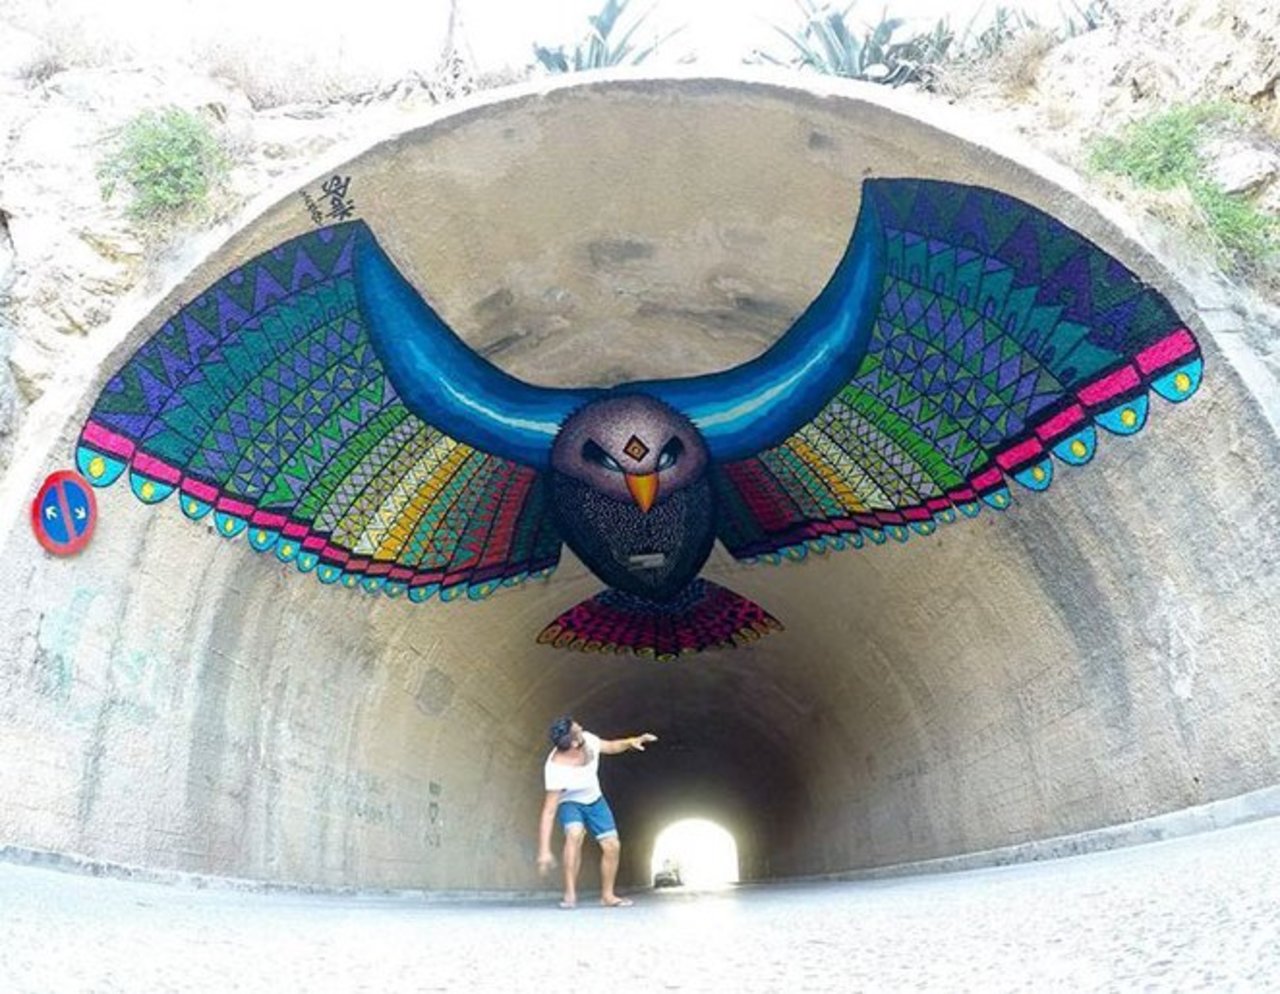 #Mexican Street #Artist Spaik Paints Giant Eagle #Mural In #Ibiza   http://goo.gl/fQPlmQ #Spain #StreetArt https://t.co/ysOsbD4EvS